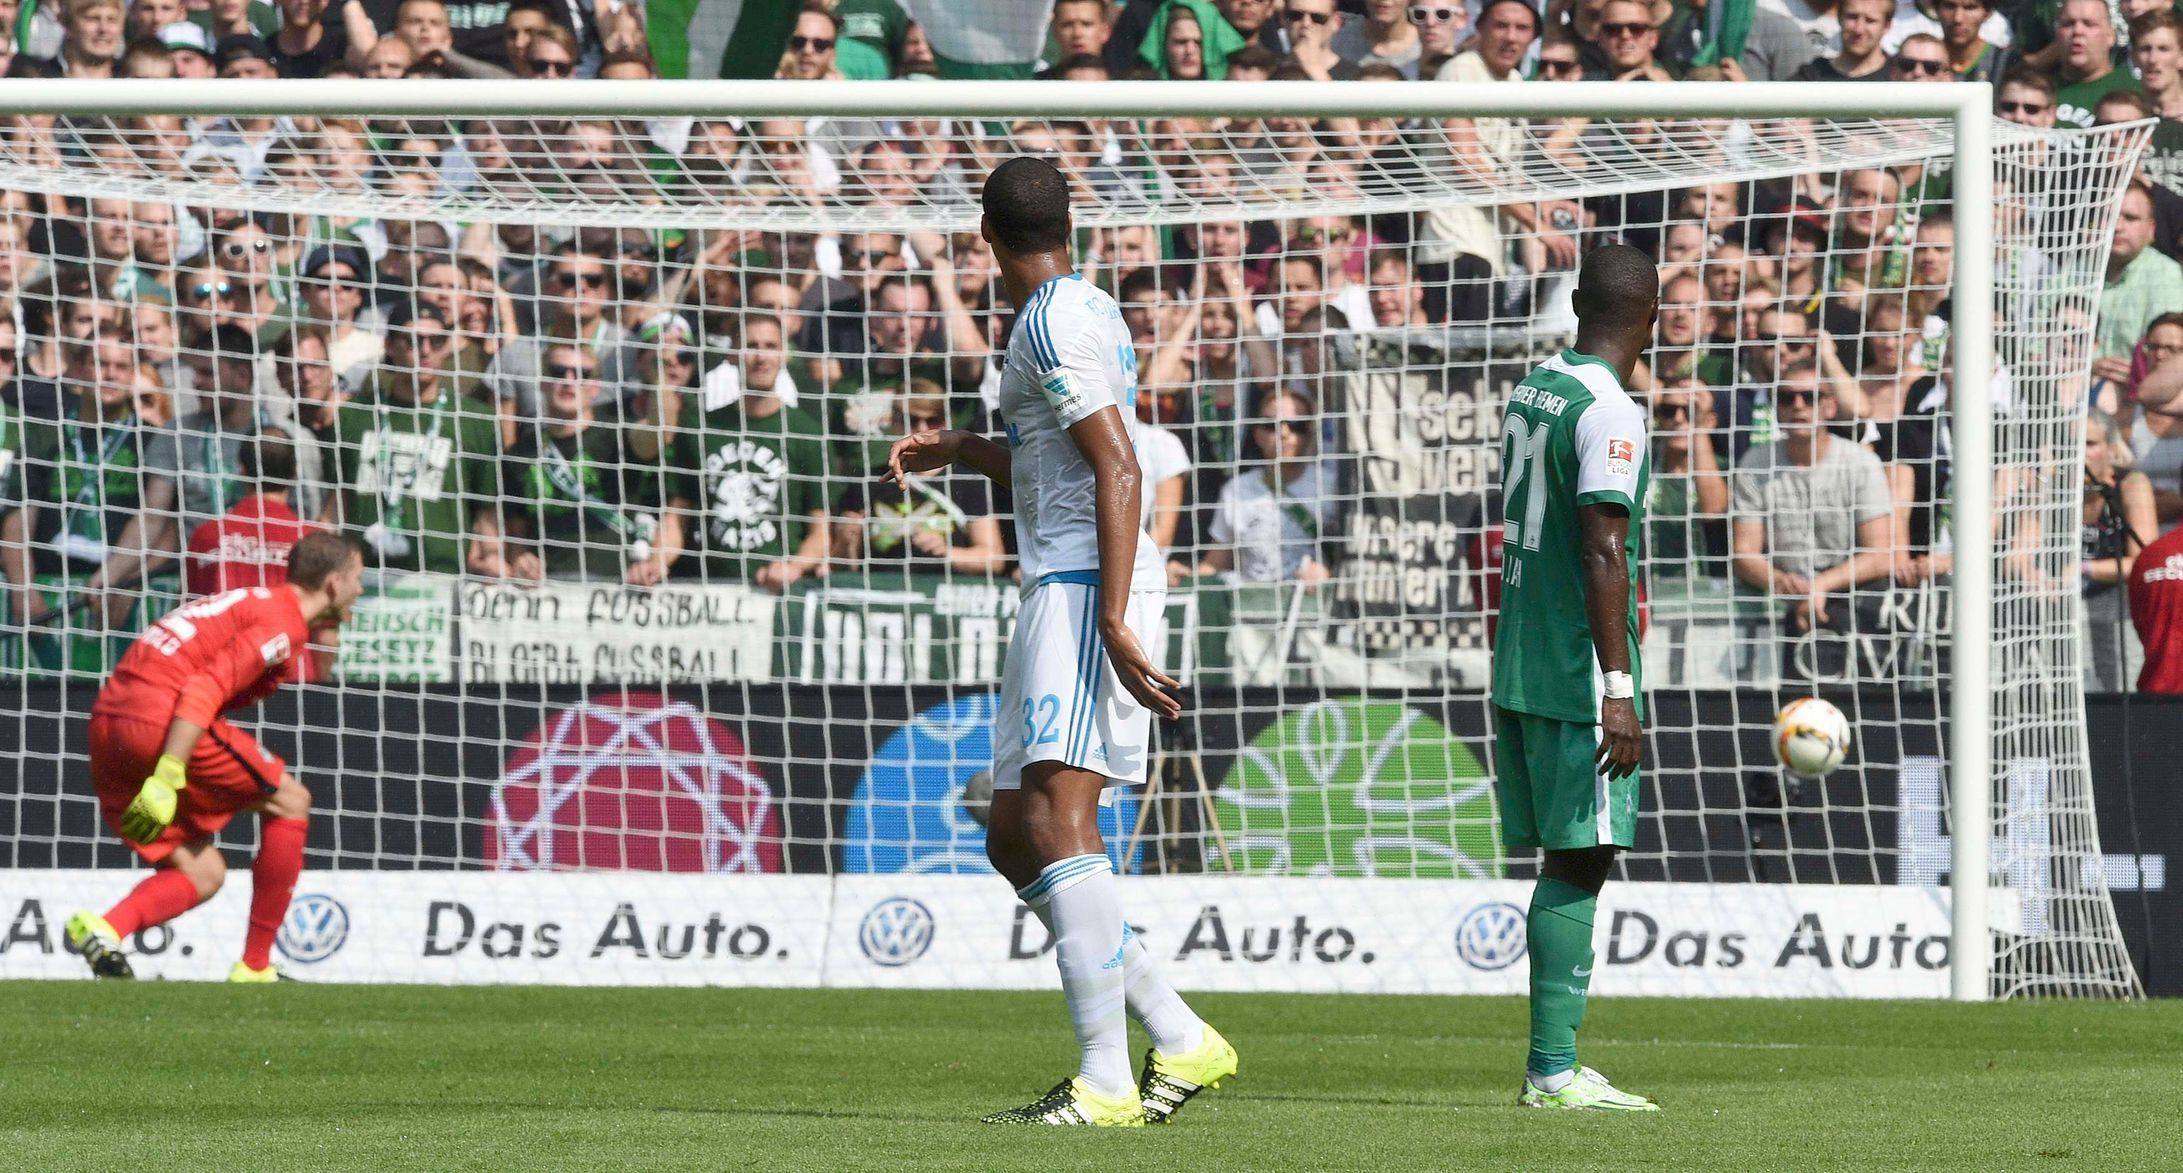 Schalke 04's Matip and Werder Bremen's Ujah react as Weder Bremen's Selassie scores an own goal during the German Bundesliga first division soccer match against Schalke 04 in Bremen